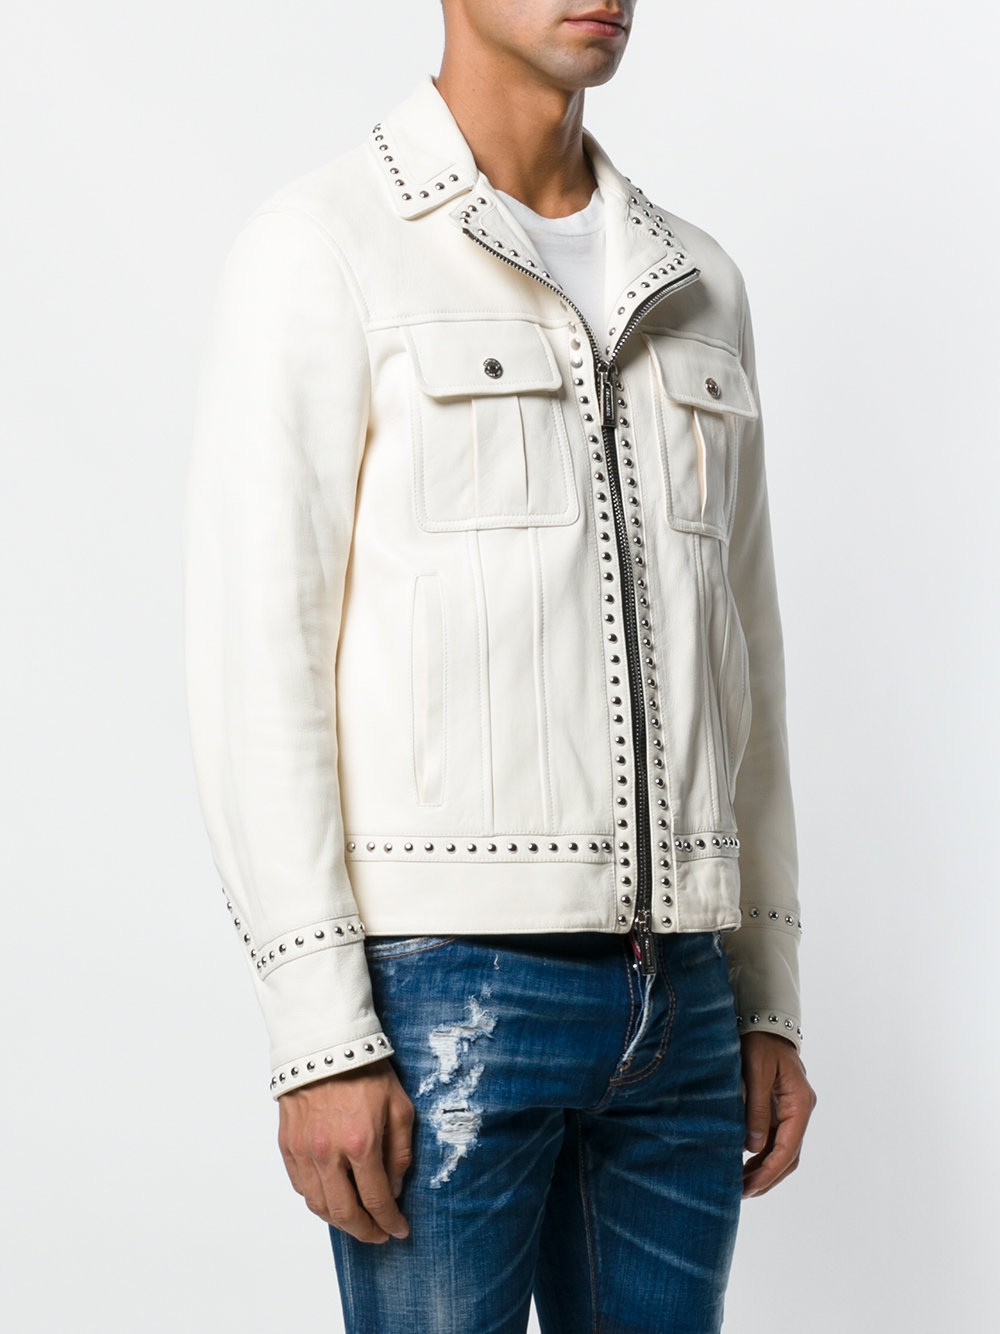 versace white leather jacket